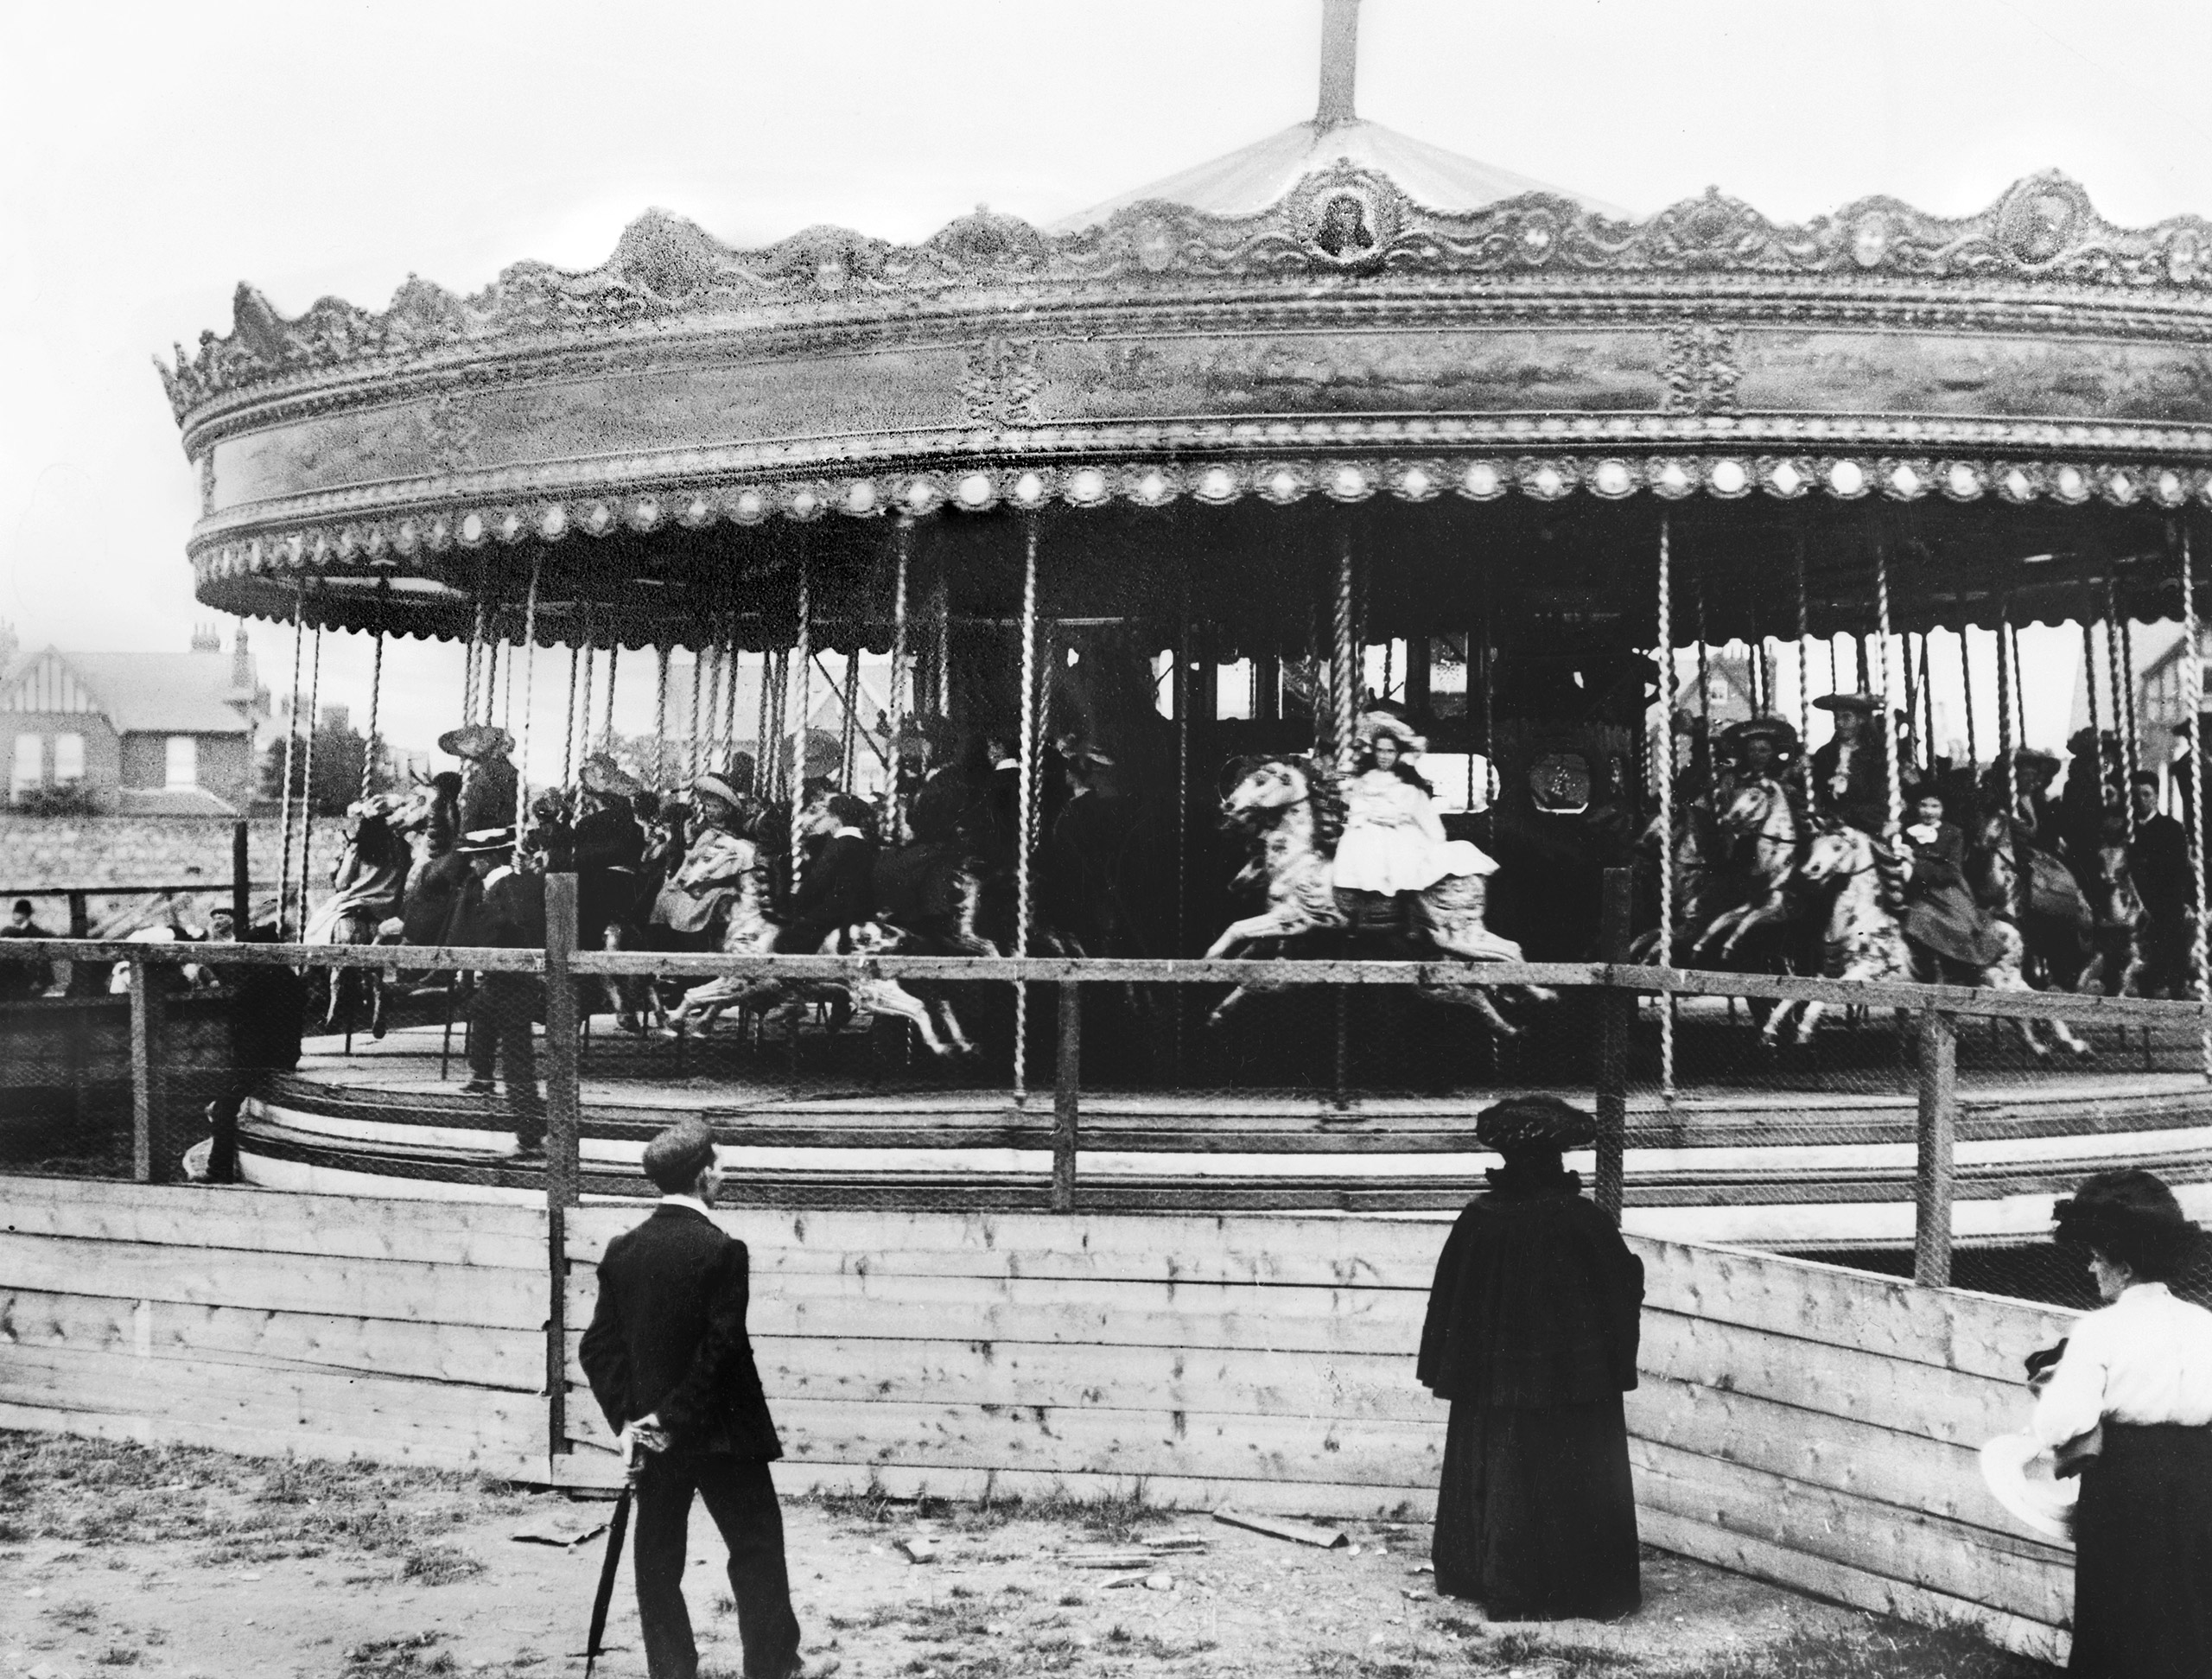 A Roundabout at the Guinness Show in Ballsbridge, Dublin, circa 1904.